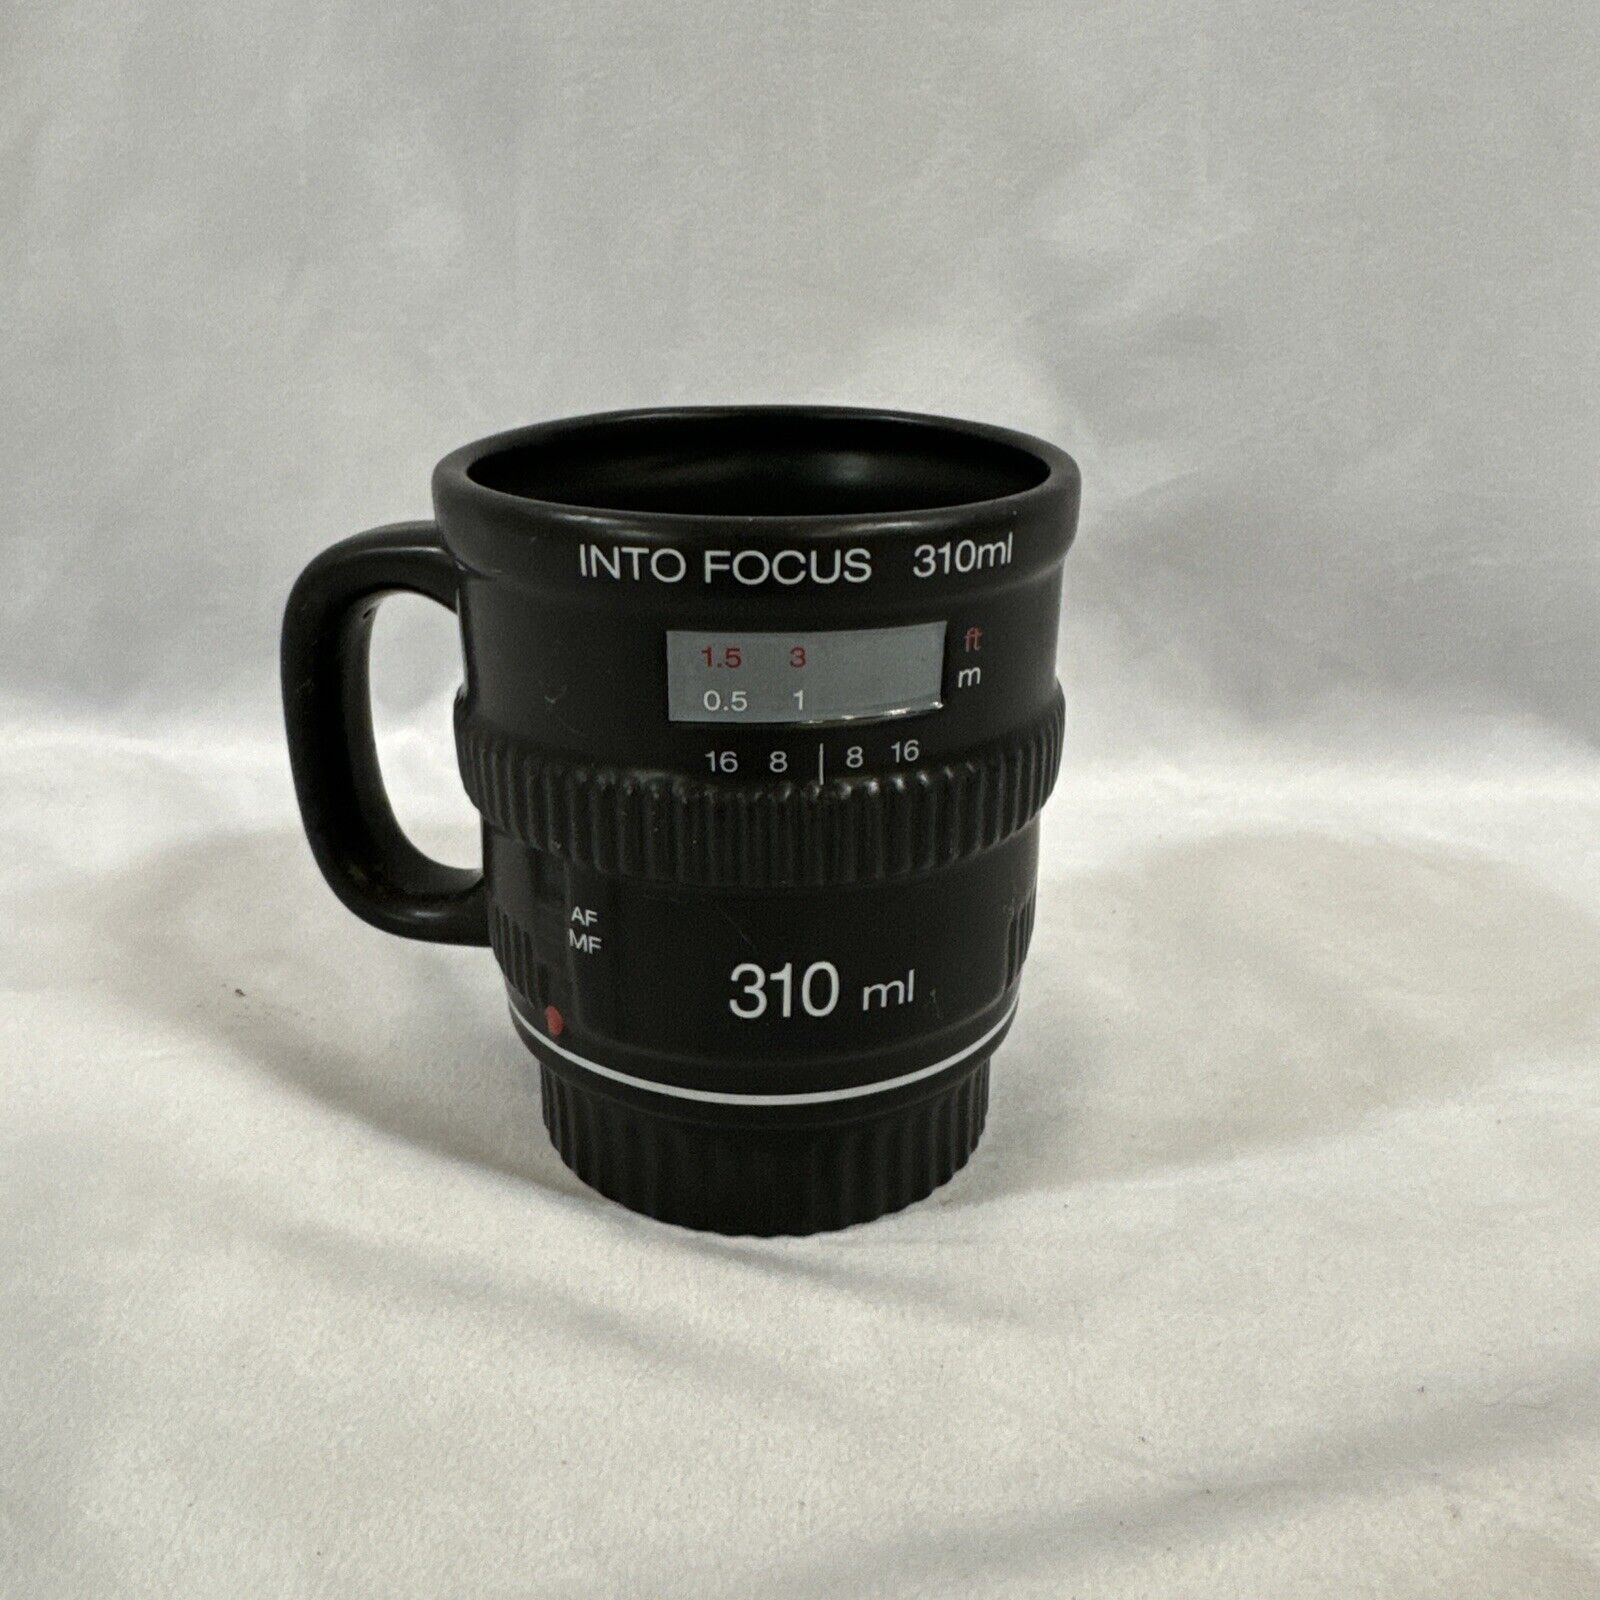 Into Focus ceramic coffee mug Bitten camera lens design